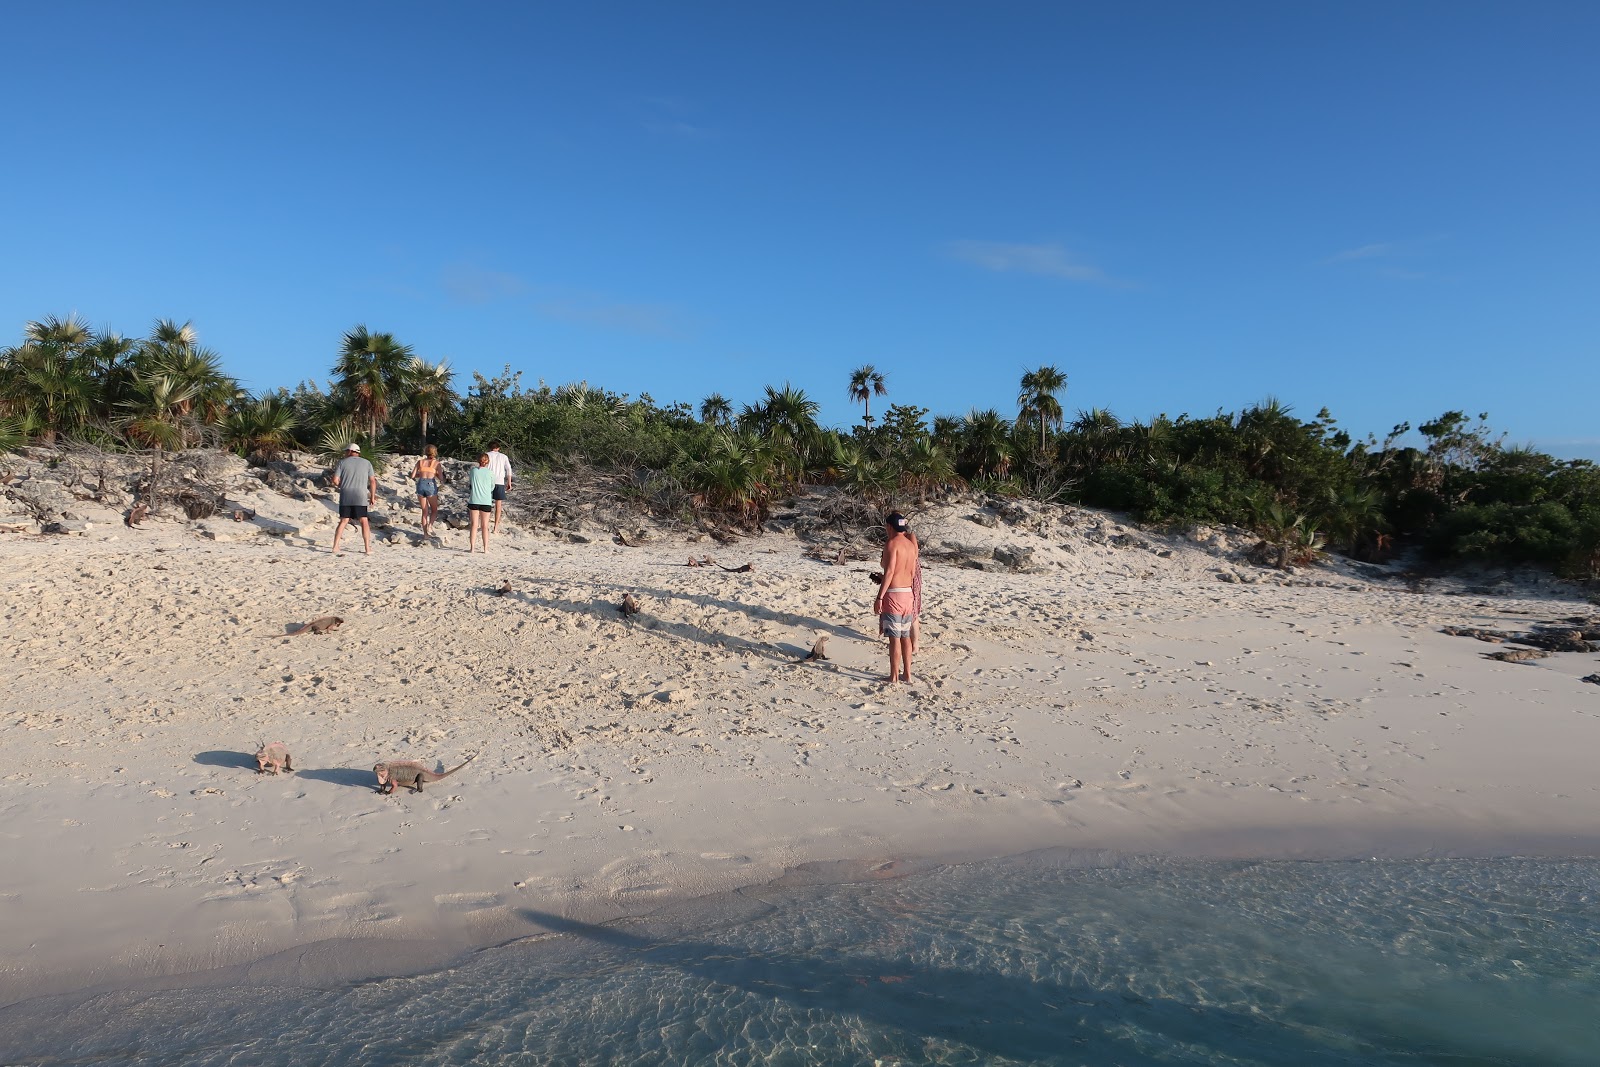 Fotografija Iguana beach nahaja se v naravnem okolju